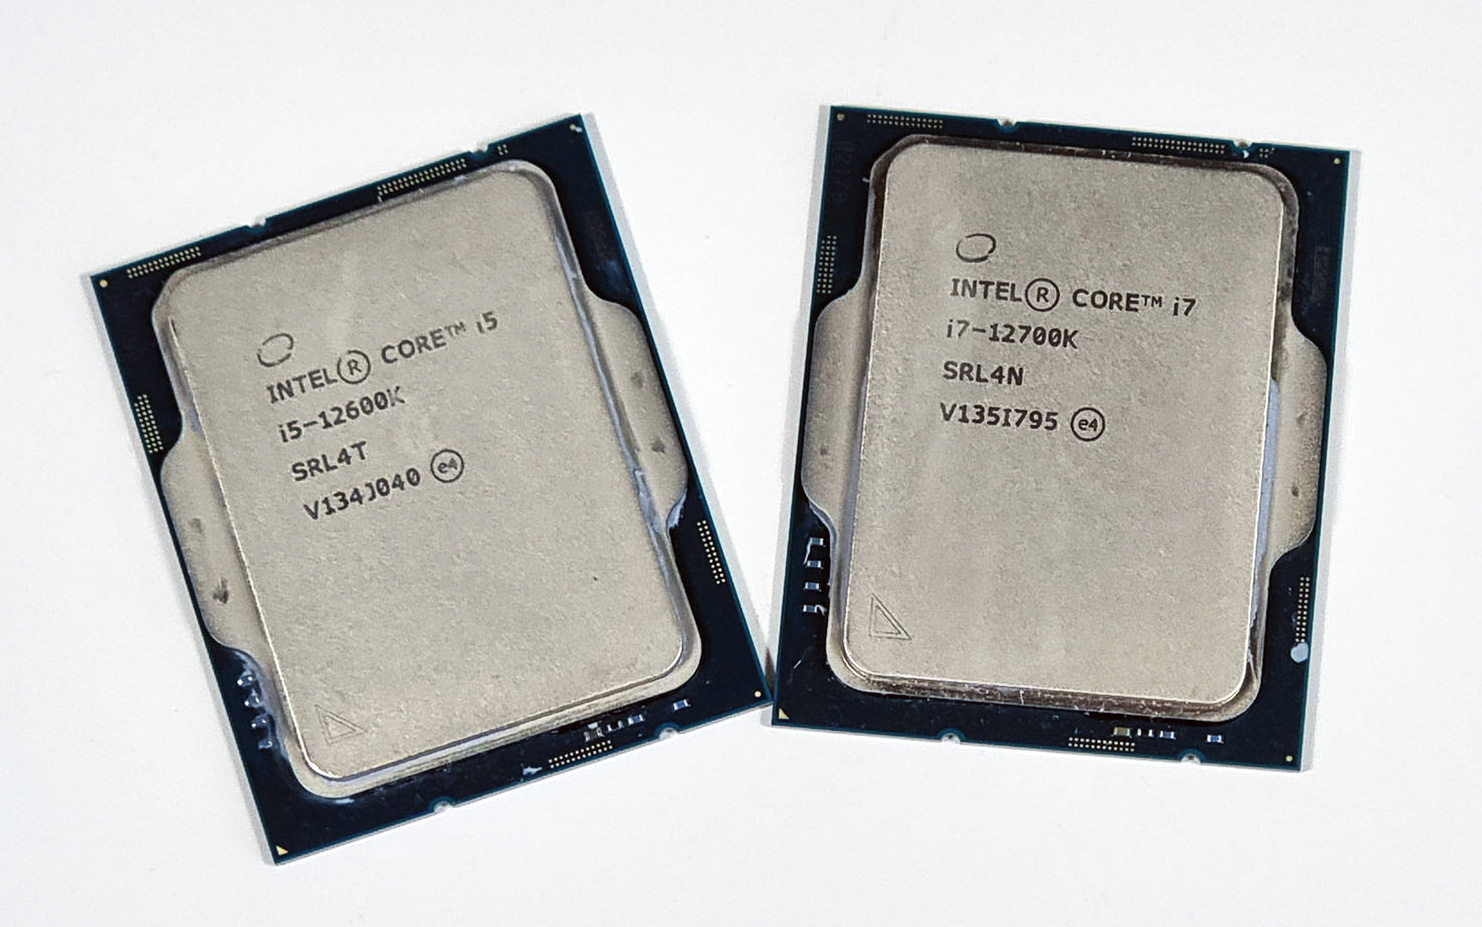 12600kf характеристики. Процессор Intel Core i7 12700k. Core i5 12600k. Процессор Intel Core i5-12600k. Процессор Intel Core i5-12600k Box.